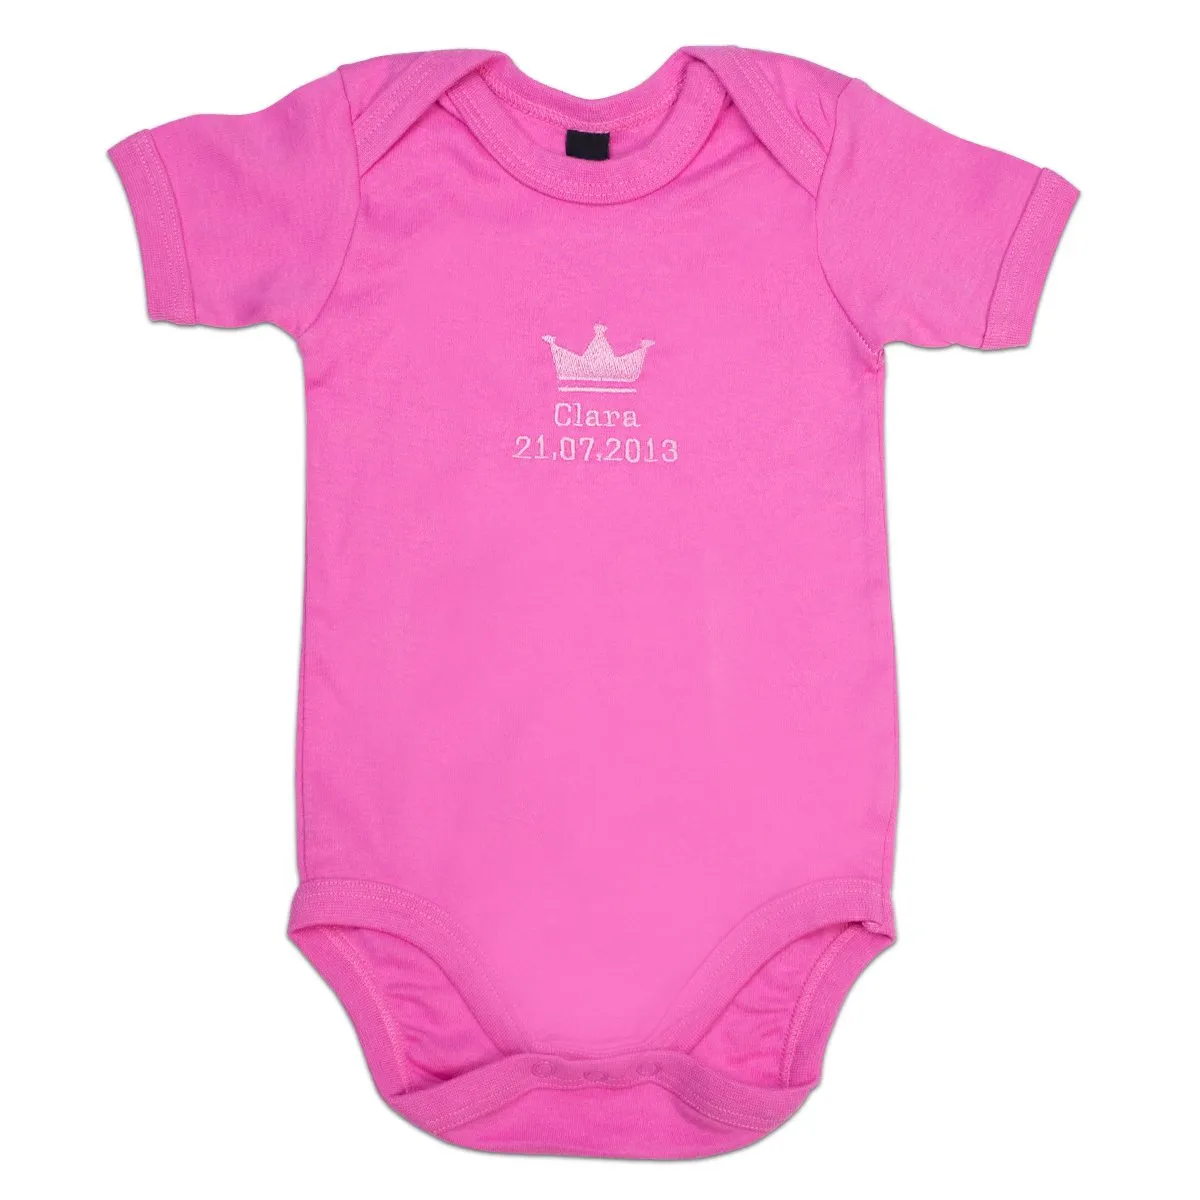 Baby-Body mit Namen - pink - 6-12 Monate